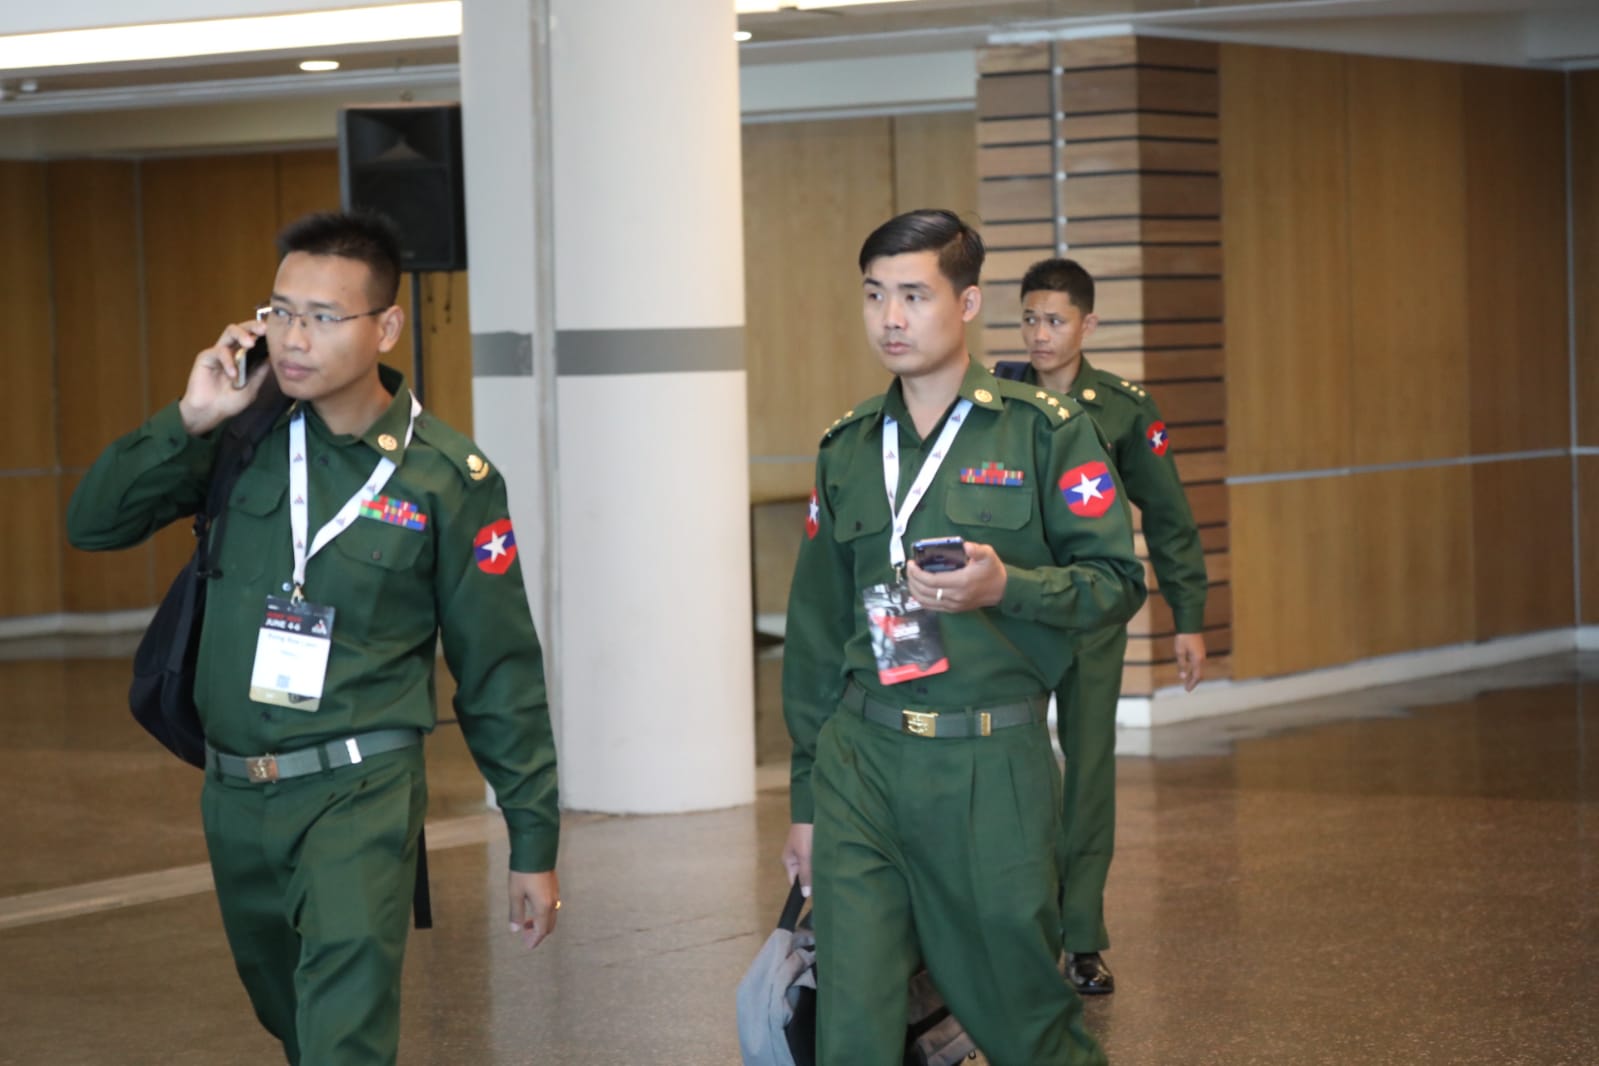 Myanmar military representatives at the ISDEF 2019 expo in Tel Aviv on June 4, 2019. (Oren Ziv)